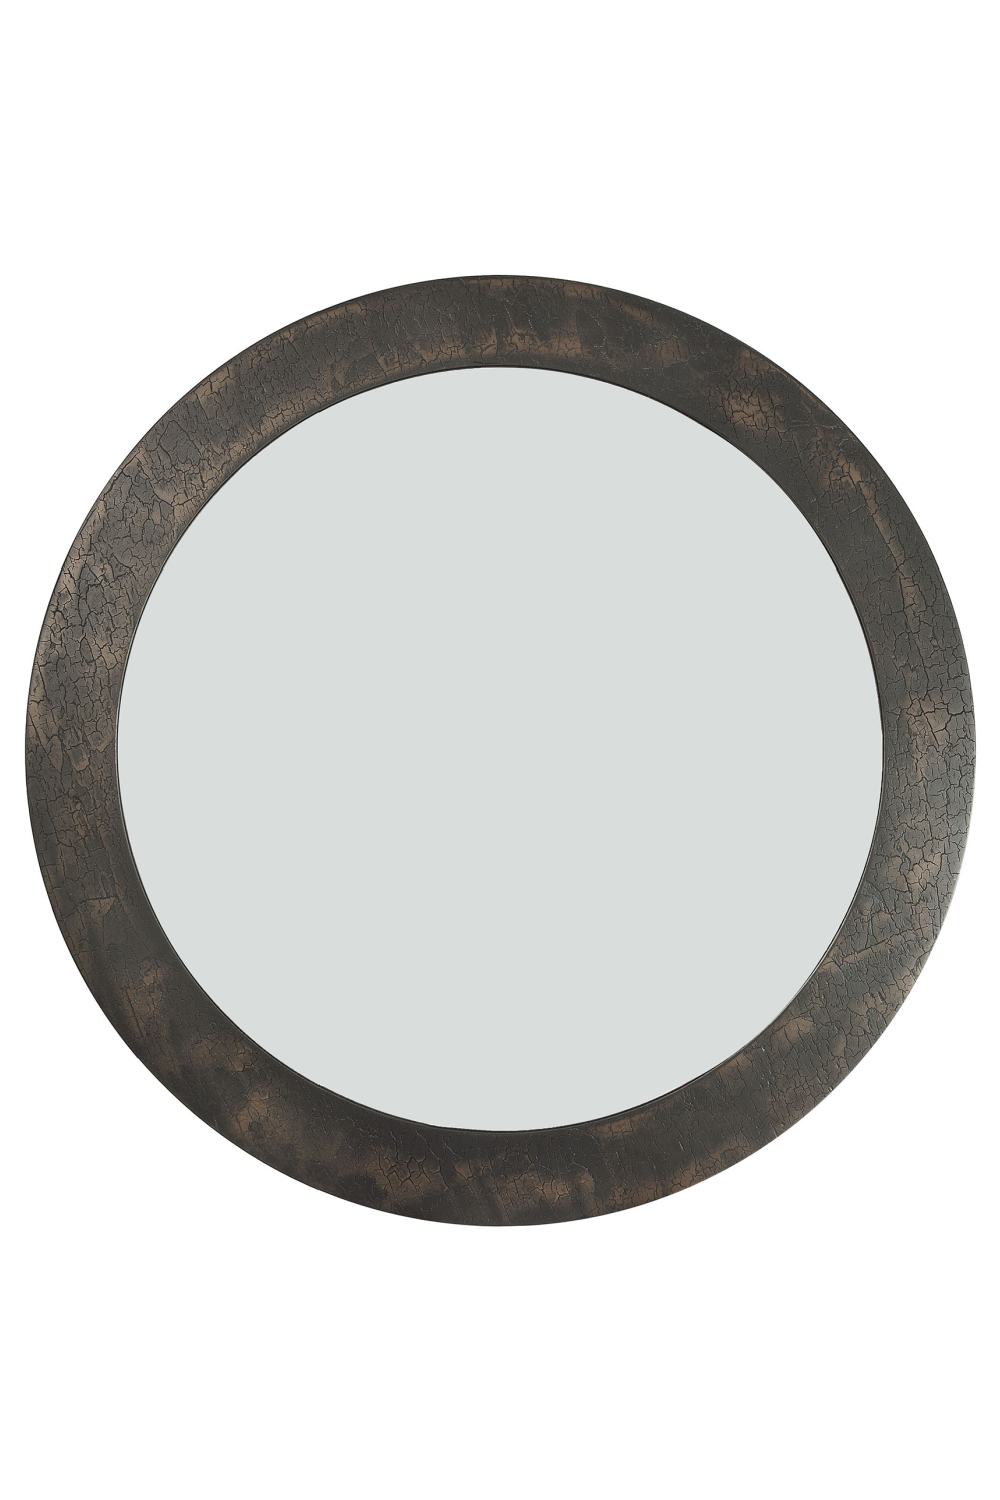 Round Minerals Wall Mirror | Ethnicraft Sphere | Oroa.com